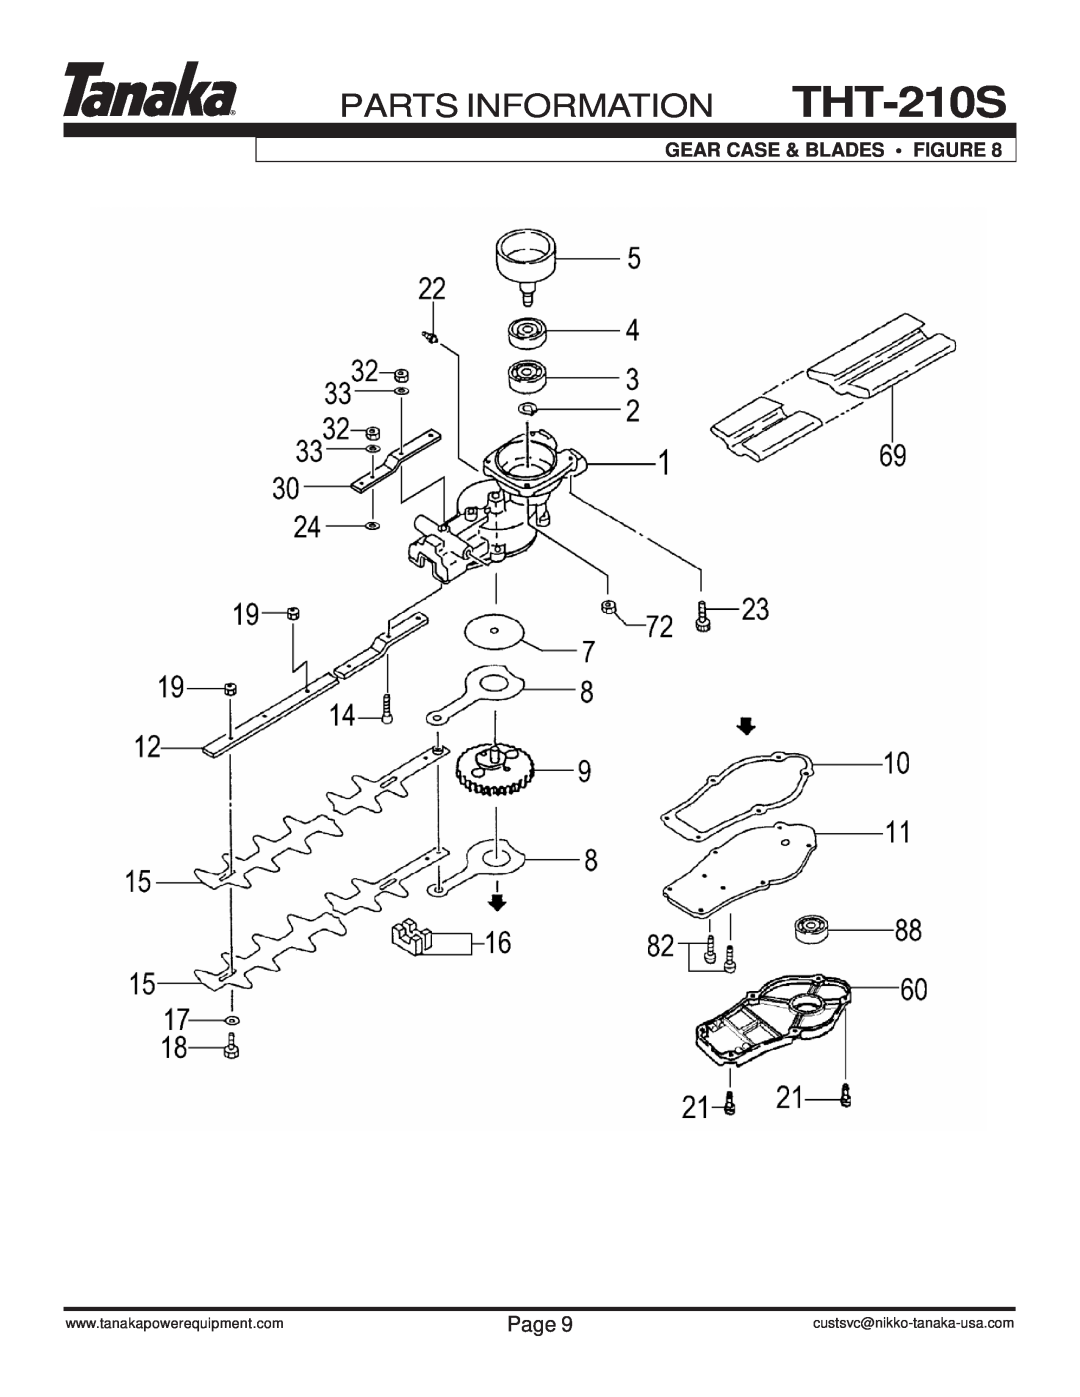 Tanaka manual Gear Case & Blades • Figure, PARTS INFORMATION THT-210S, Page, custsvc@nikko-tanaka-usa.com 